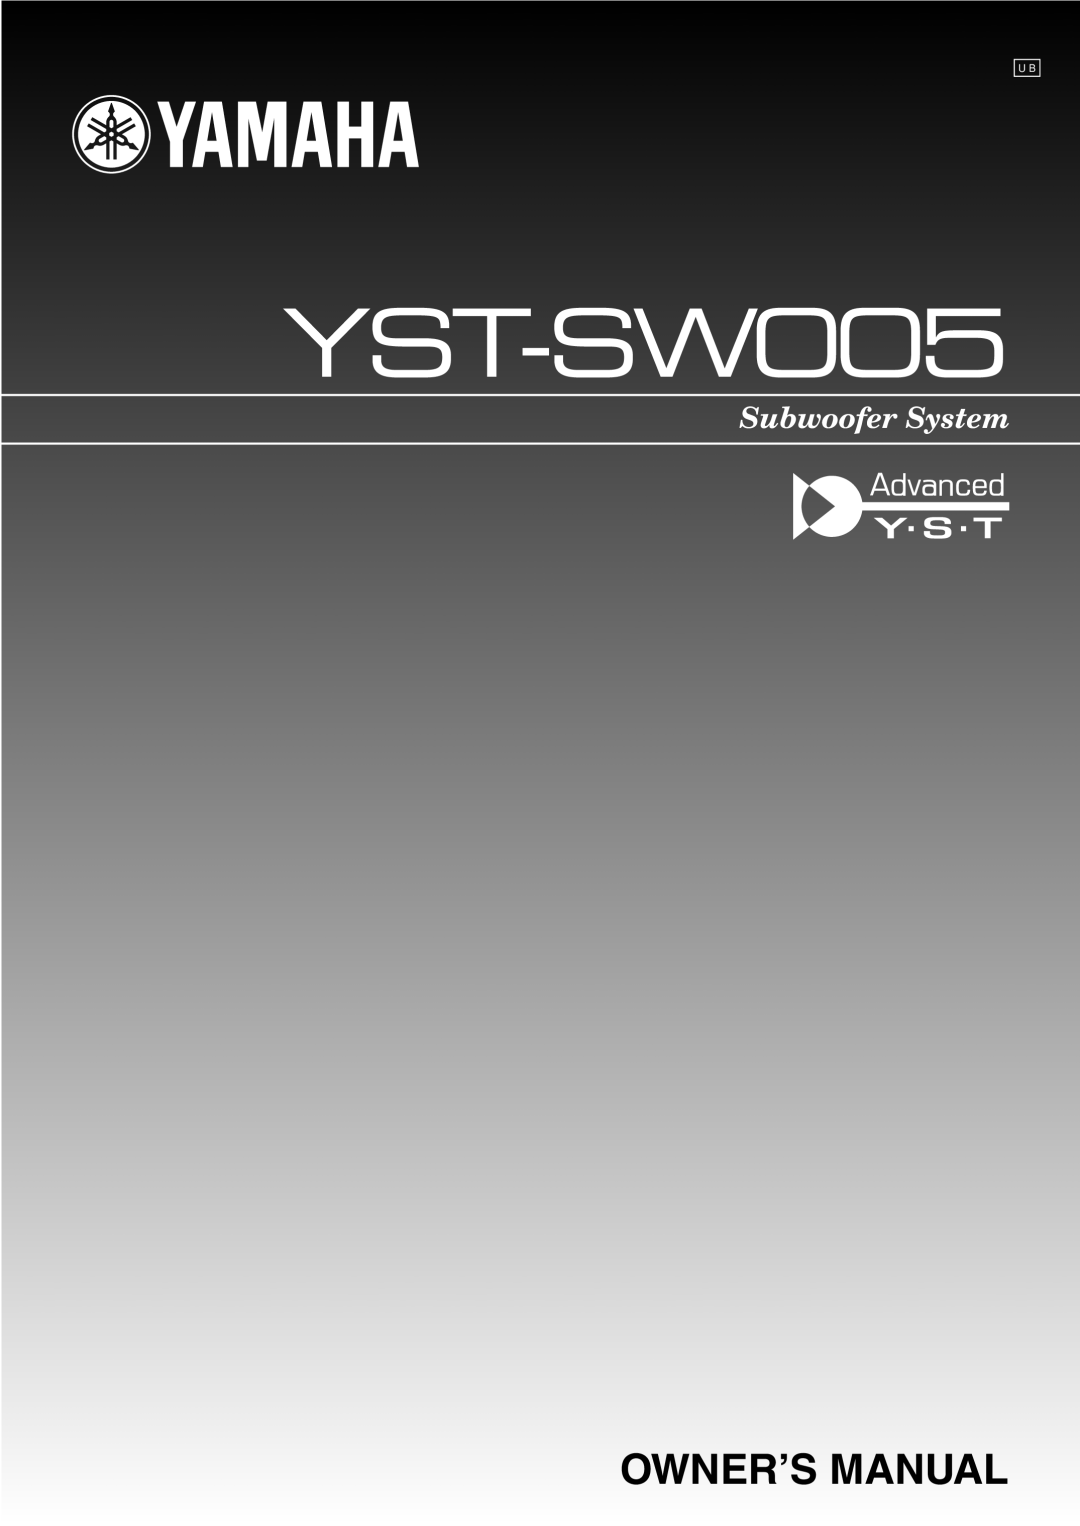 Yamaha YST-SW005 owner manual Subwoofer System 